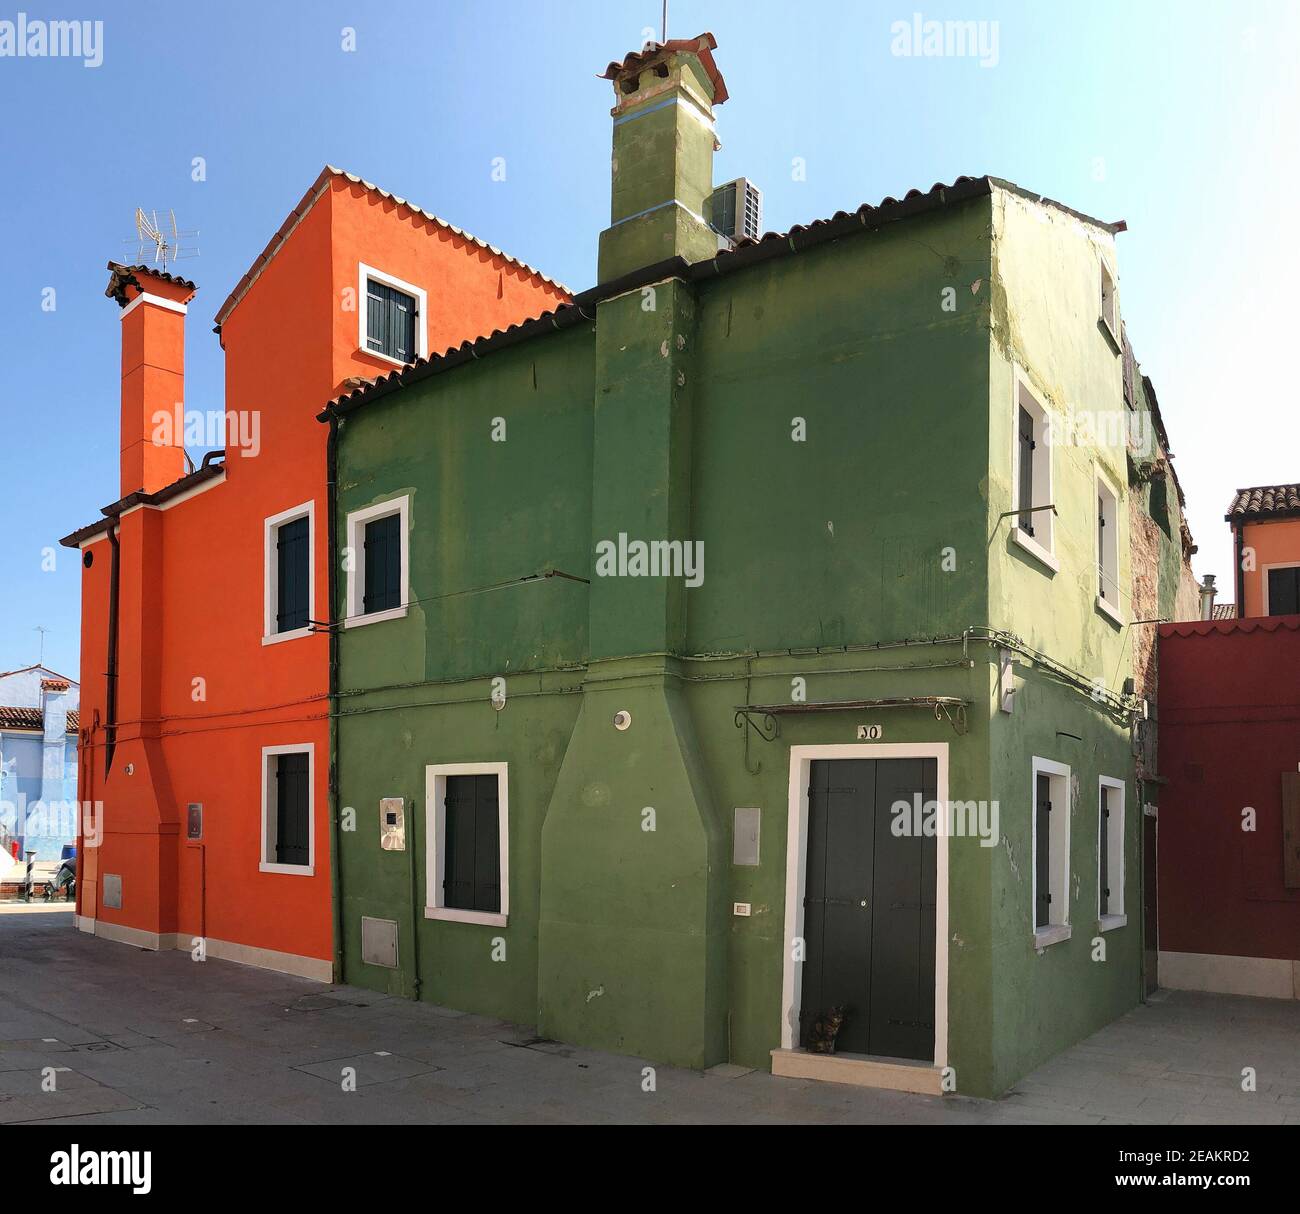 Brightly coloured houses at Burano, island in the Venetian Lagoon, Venice, Italy Stock Photo